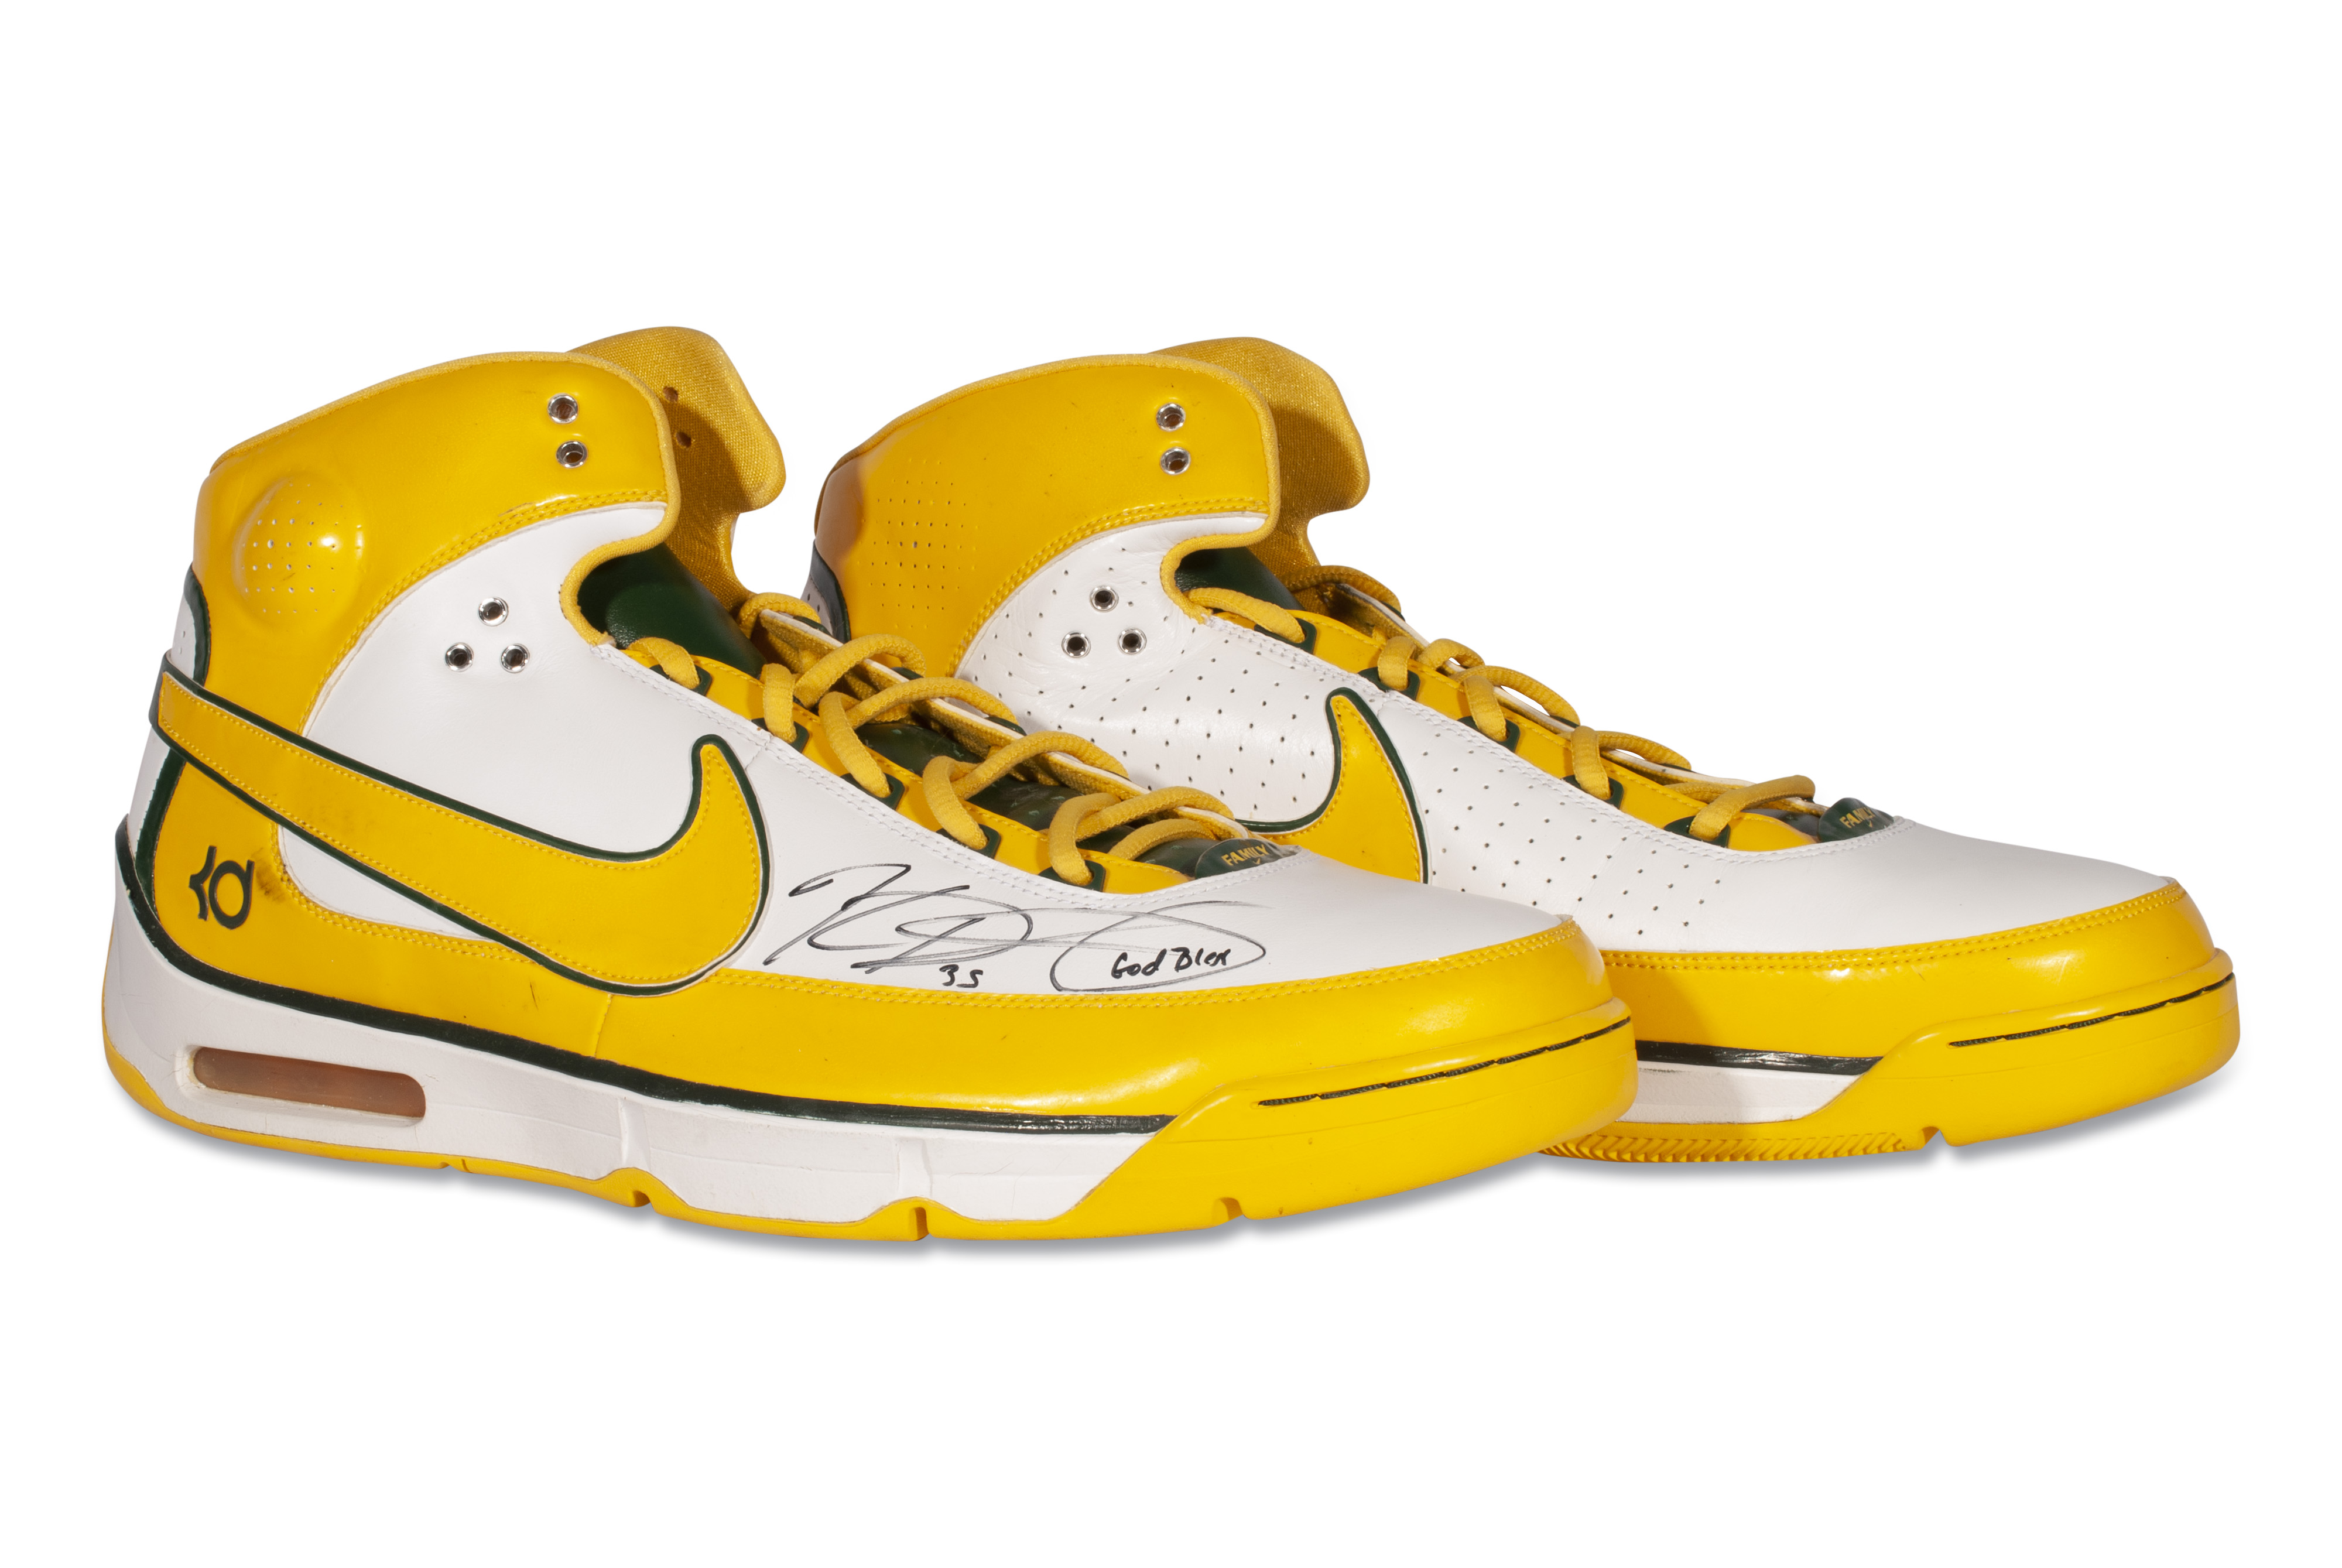 S) Vintage Nike Kevin Durant Supersonics Jersey